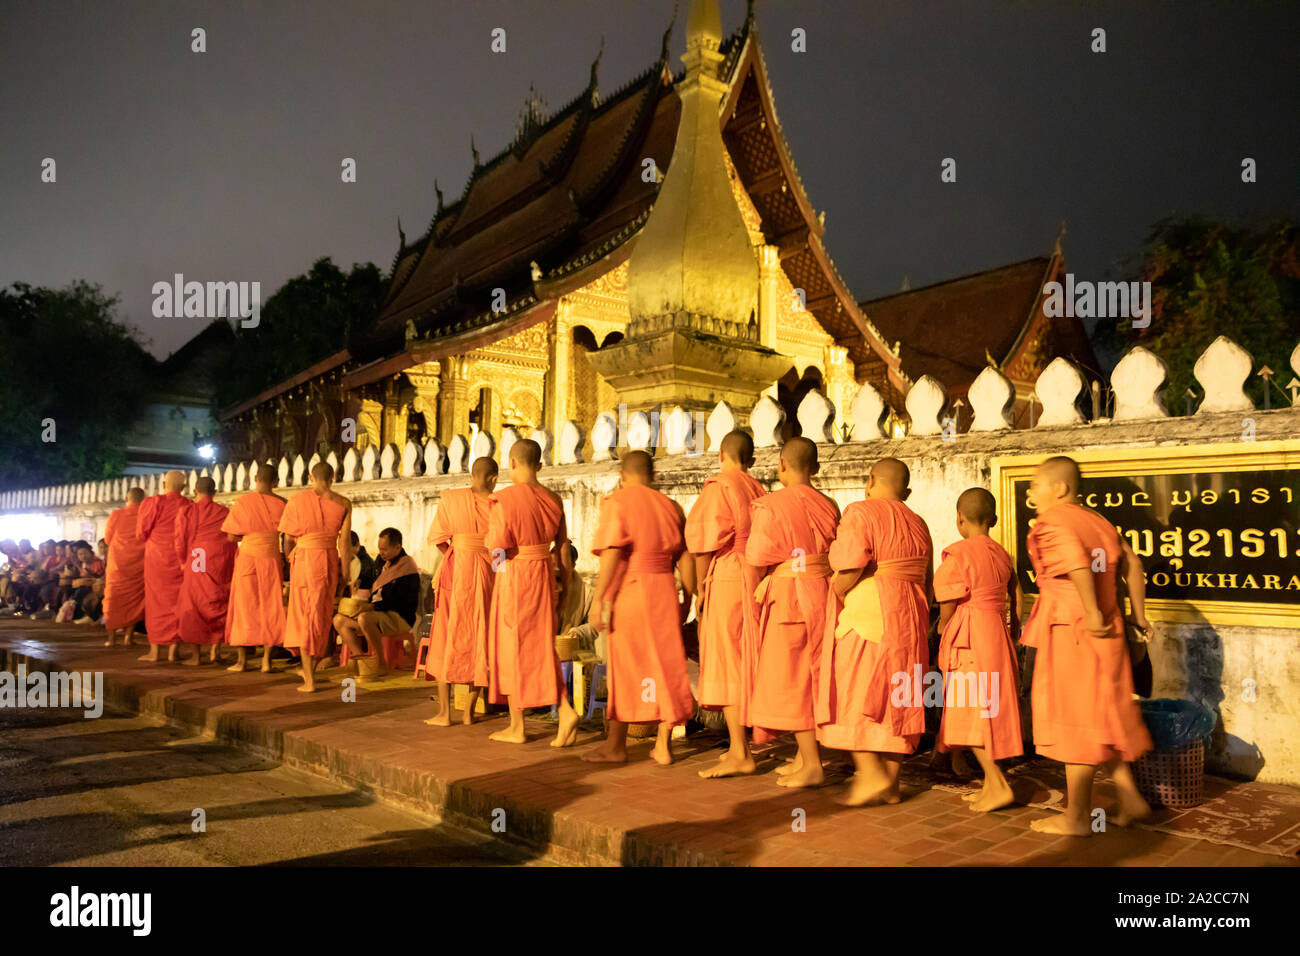 Tak bat Monks call to alms at dawn, Luang Prabang, Luang Prabang province, Northern Laos, Laos, Southeast Asia Stock Photo